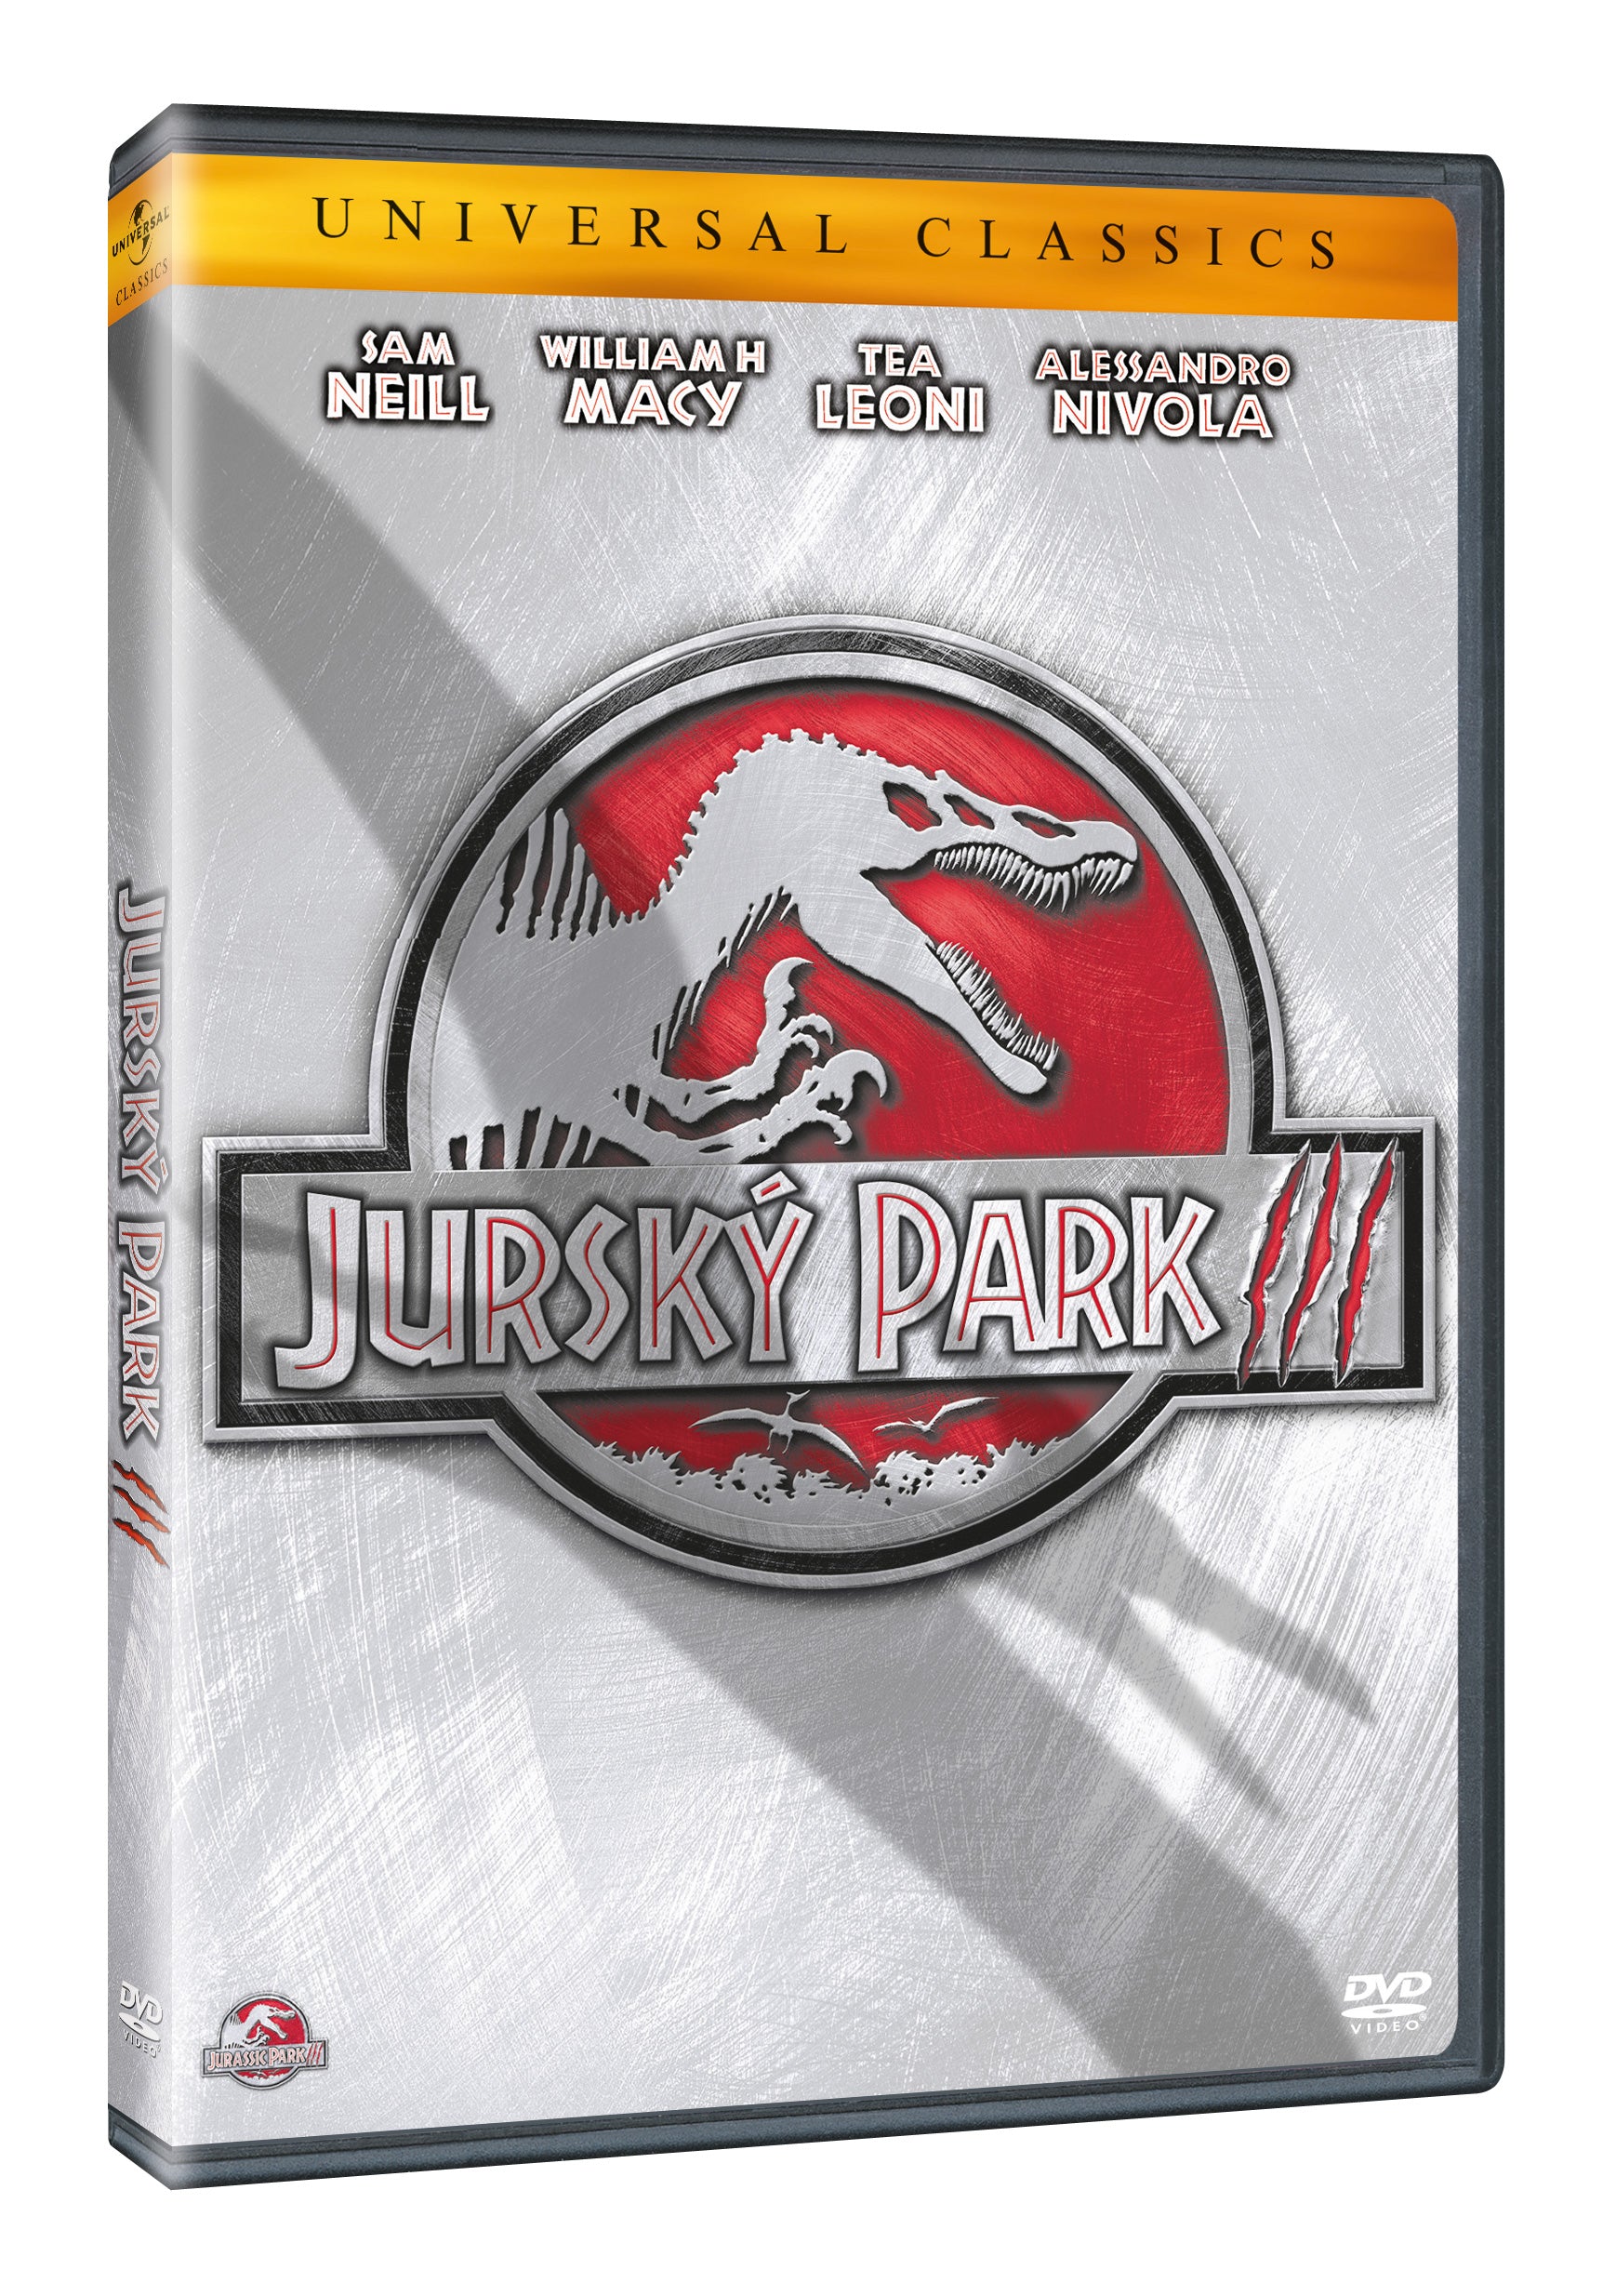 Jursky park 3 DVD / Jurassic Park III